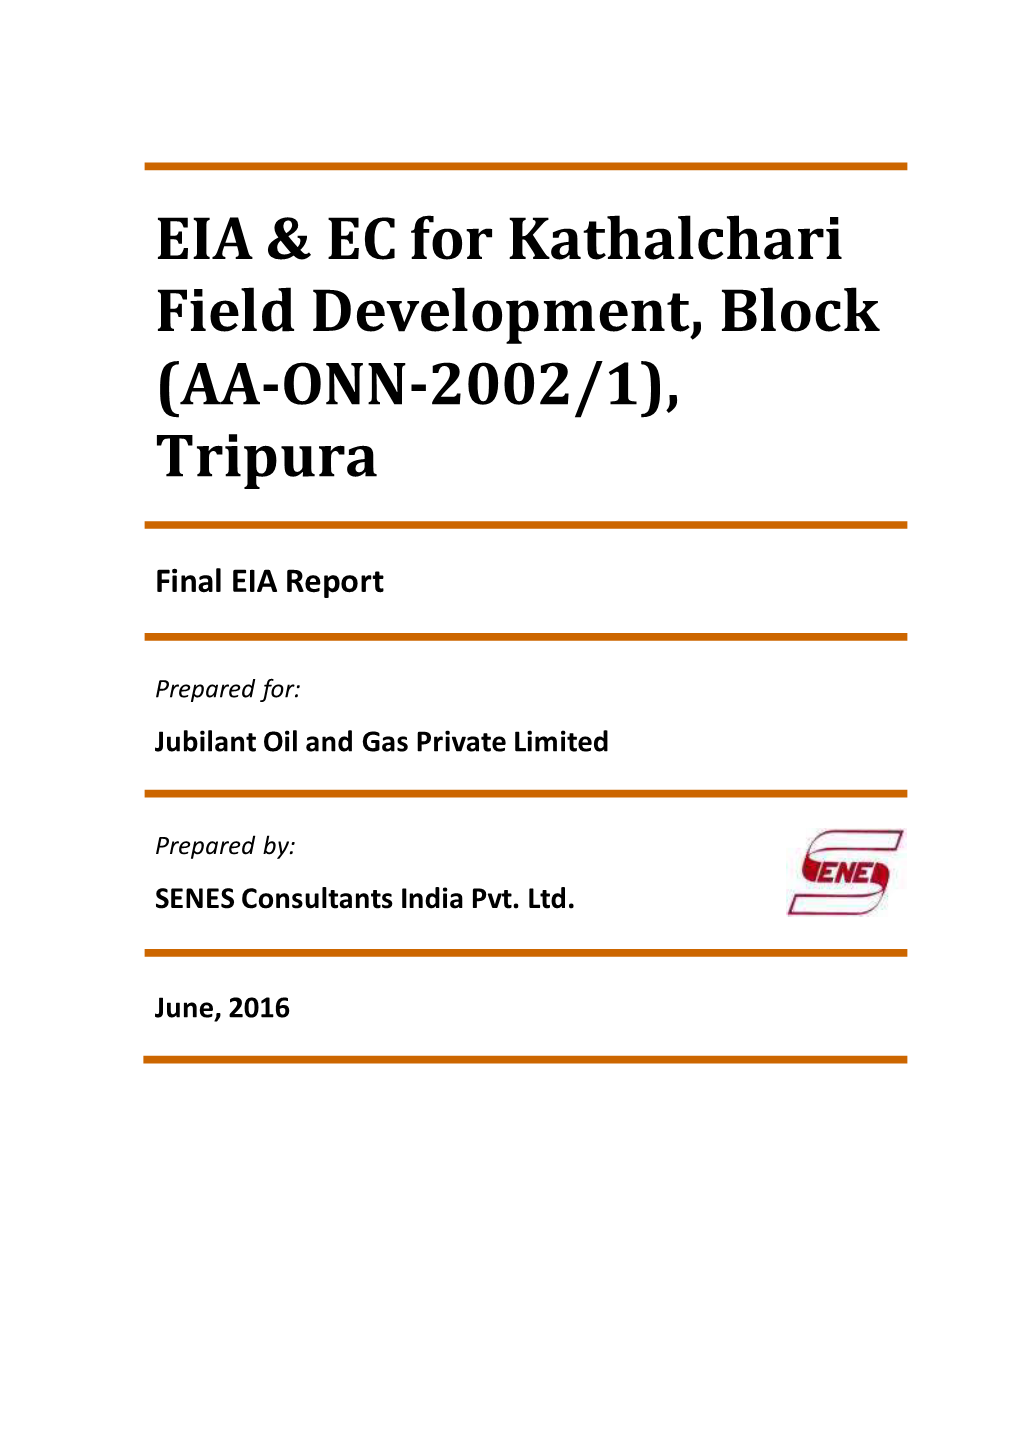 EIA & EC for Kathalchari Field Development, Block